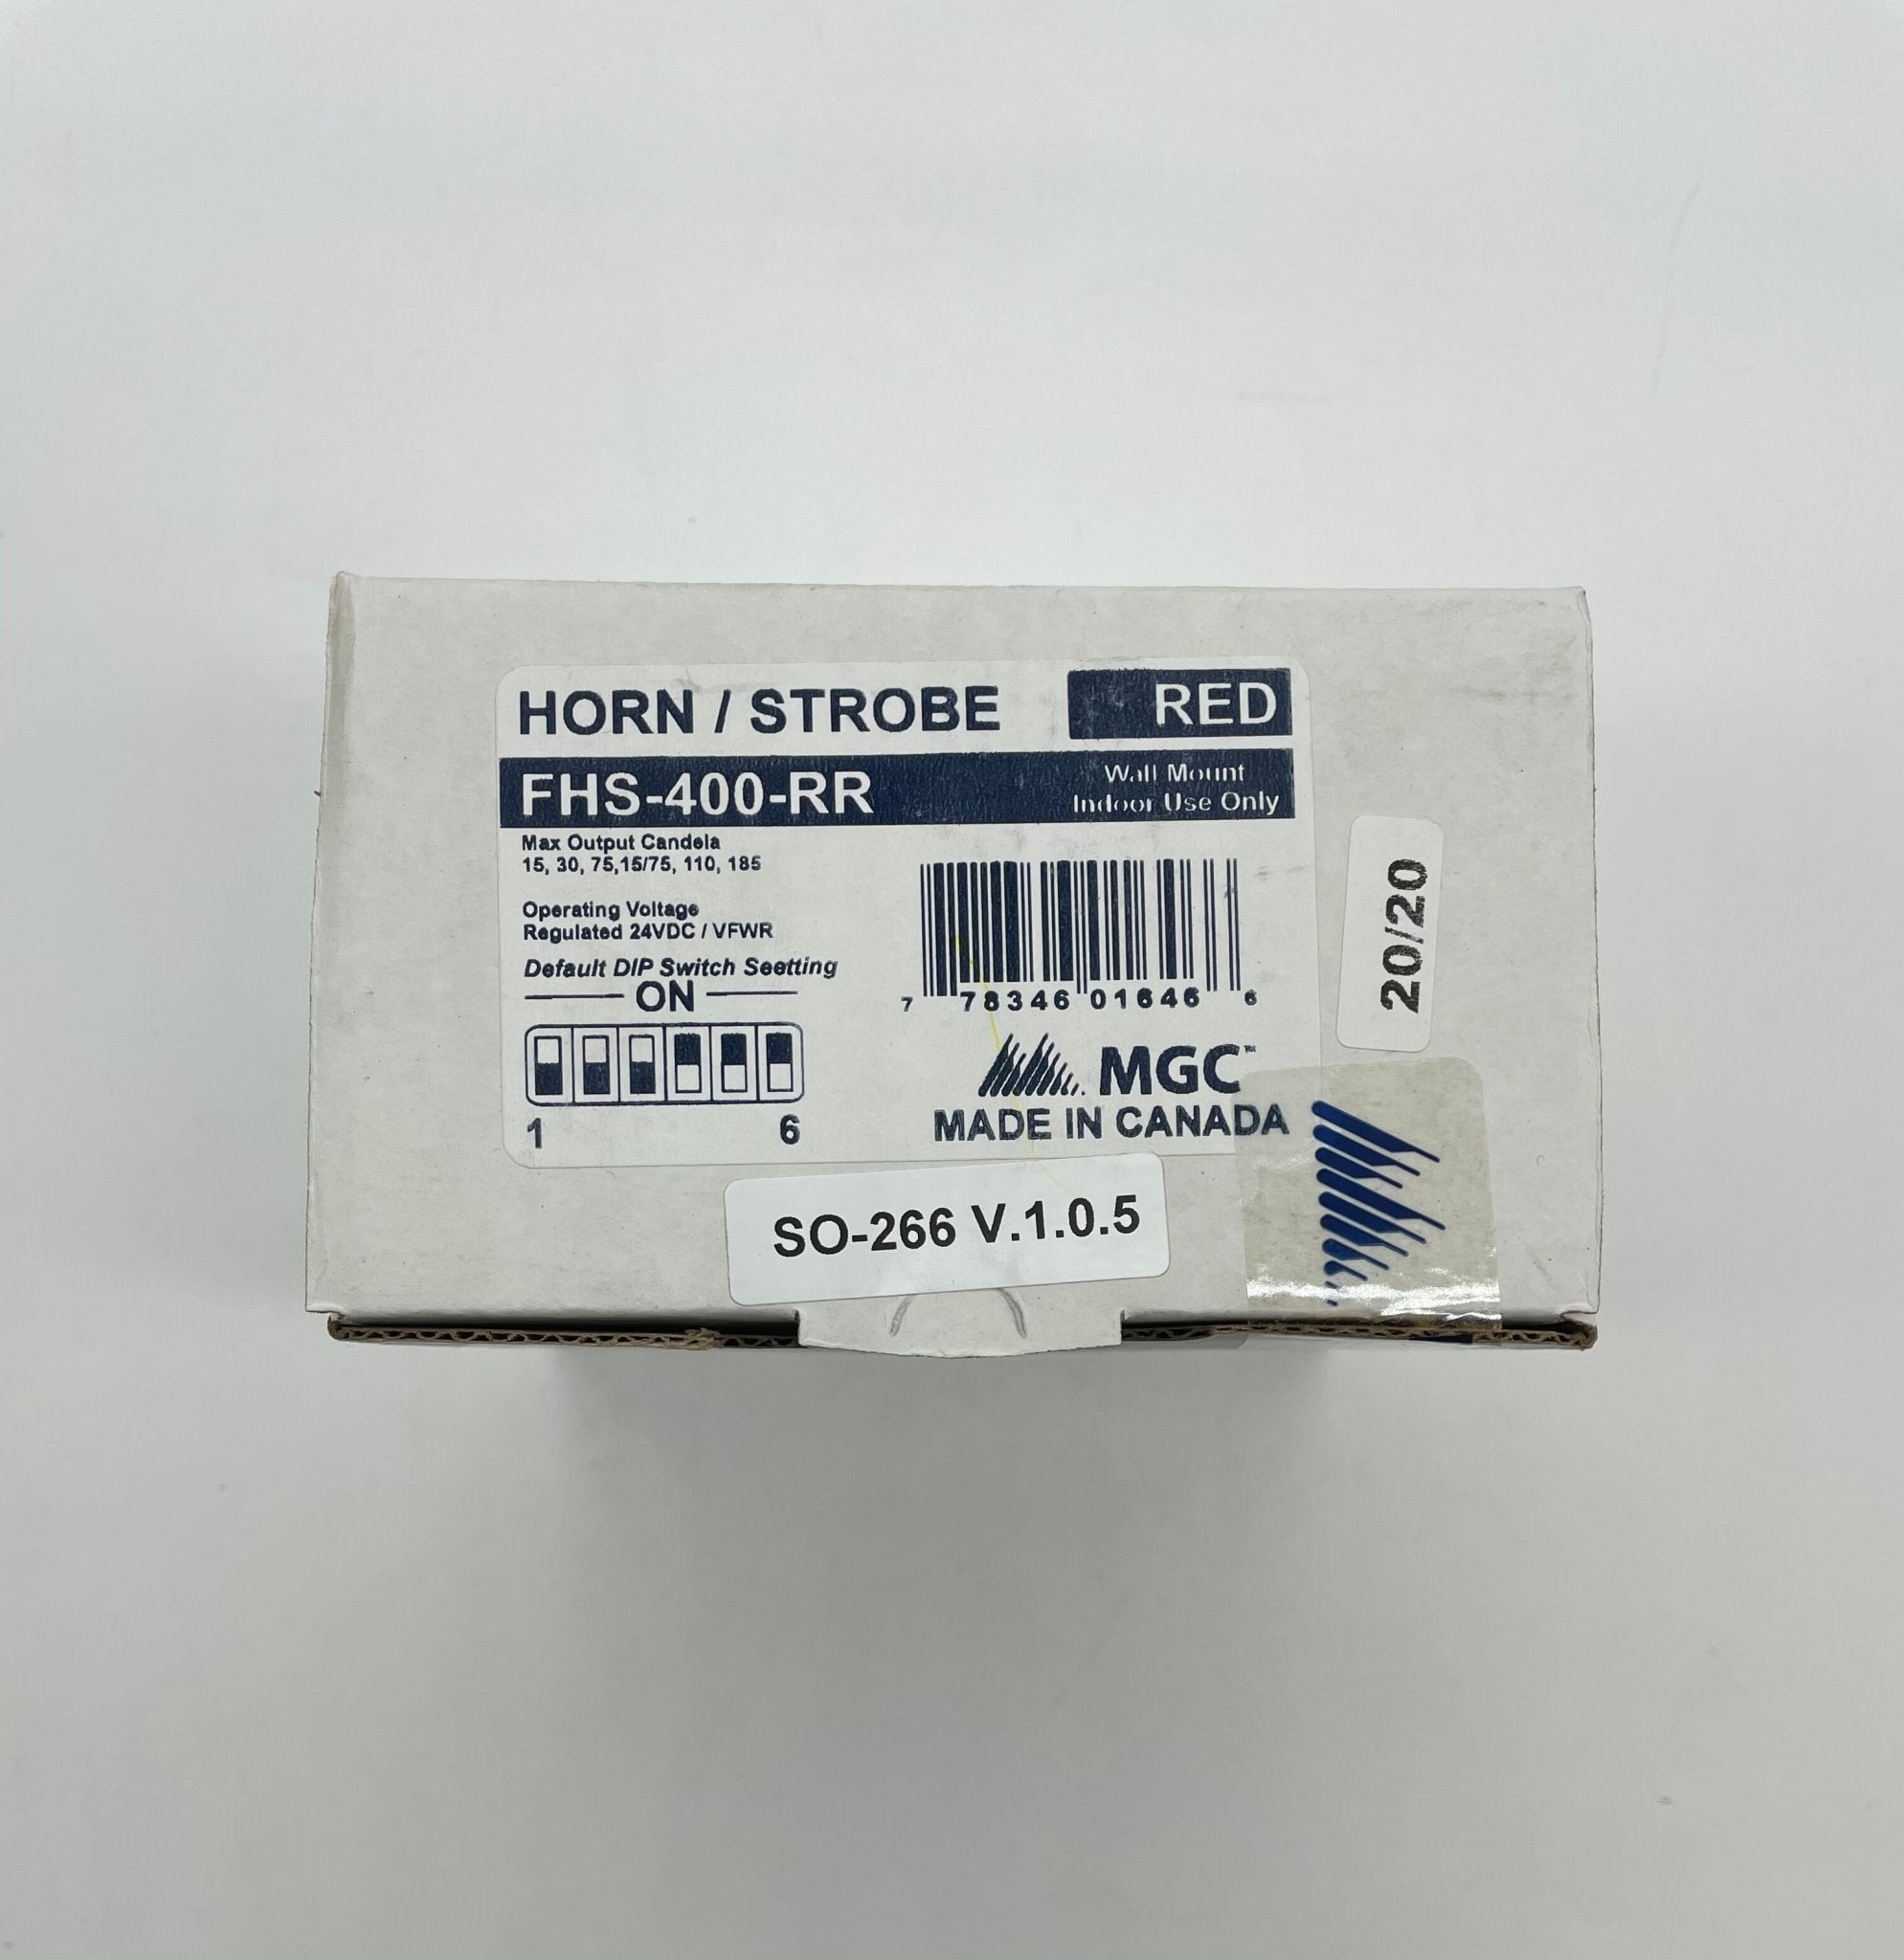 Mircom FHS-400-RR Wall Mount Horn Strobe - The Fire Alarm Supplier